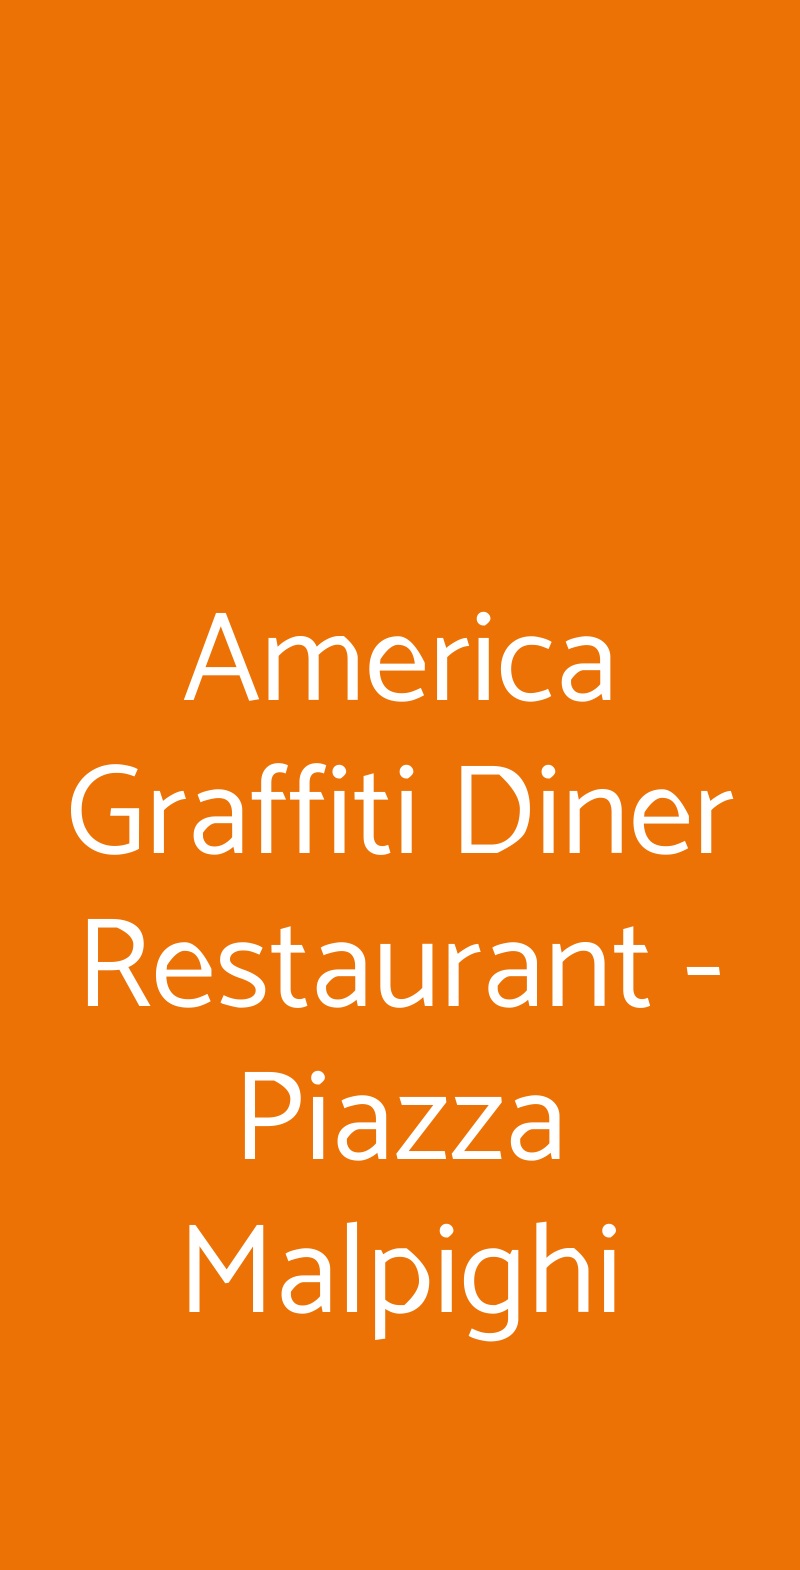 America Graffiti Diner Restaurant - Piazza Malpighi Bologna menù 1 pagina